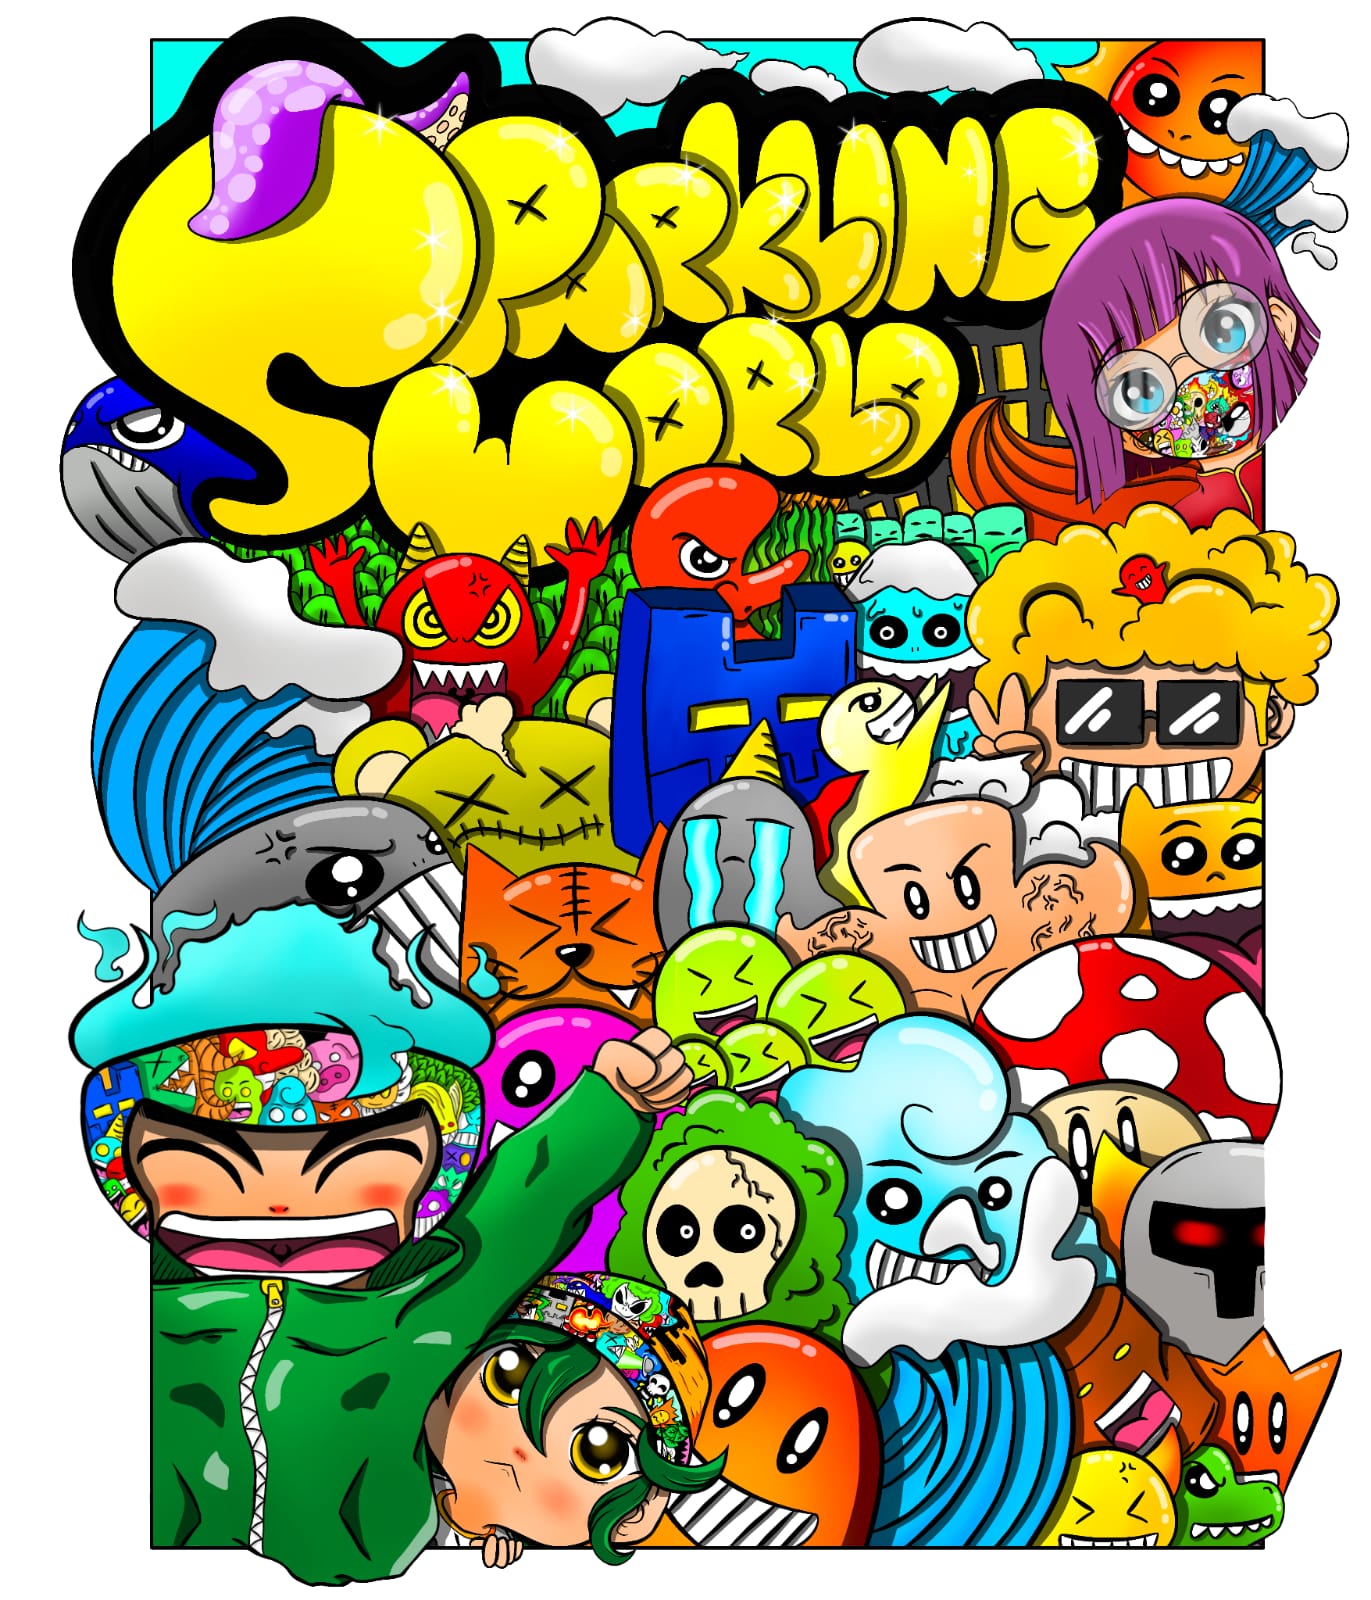 SPARKLING'S ARTWORK banner